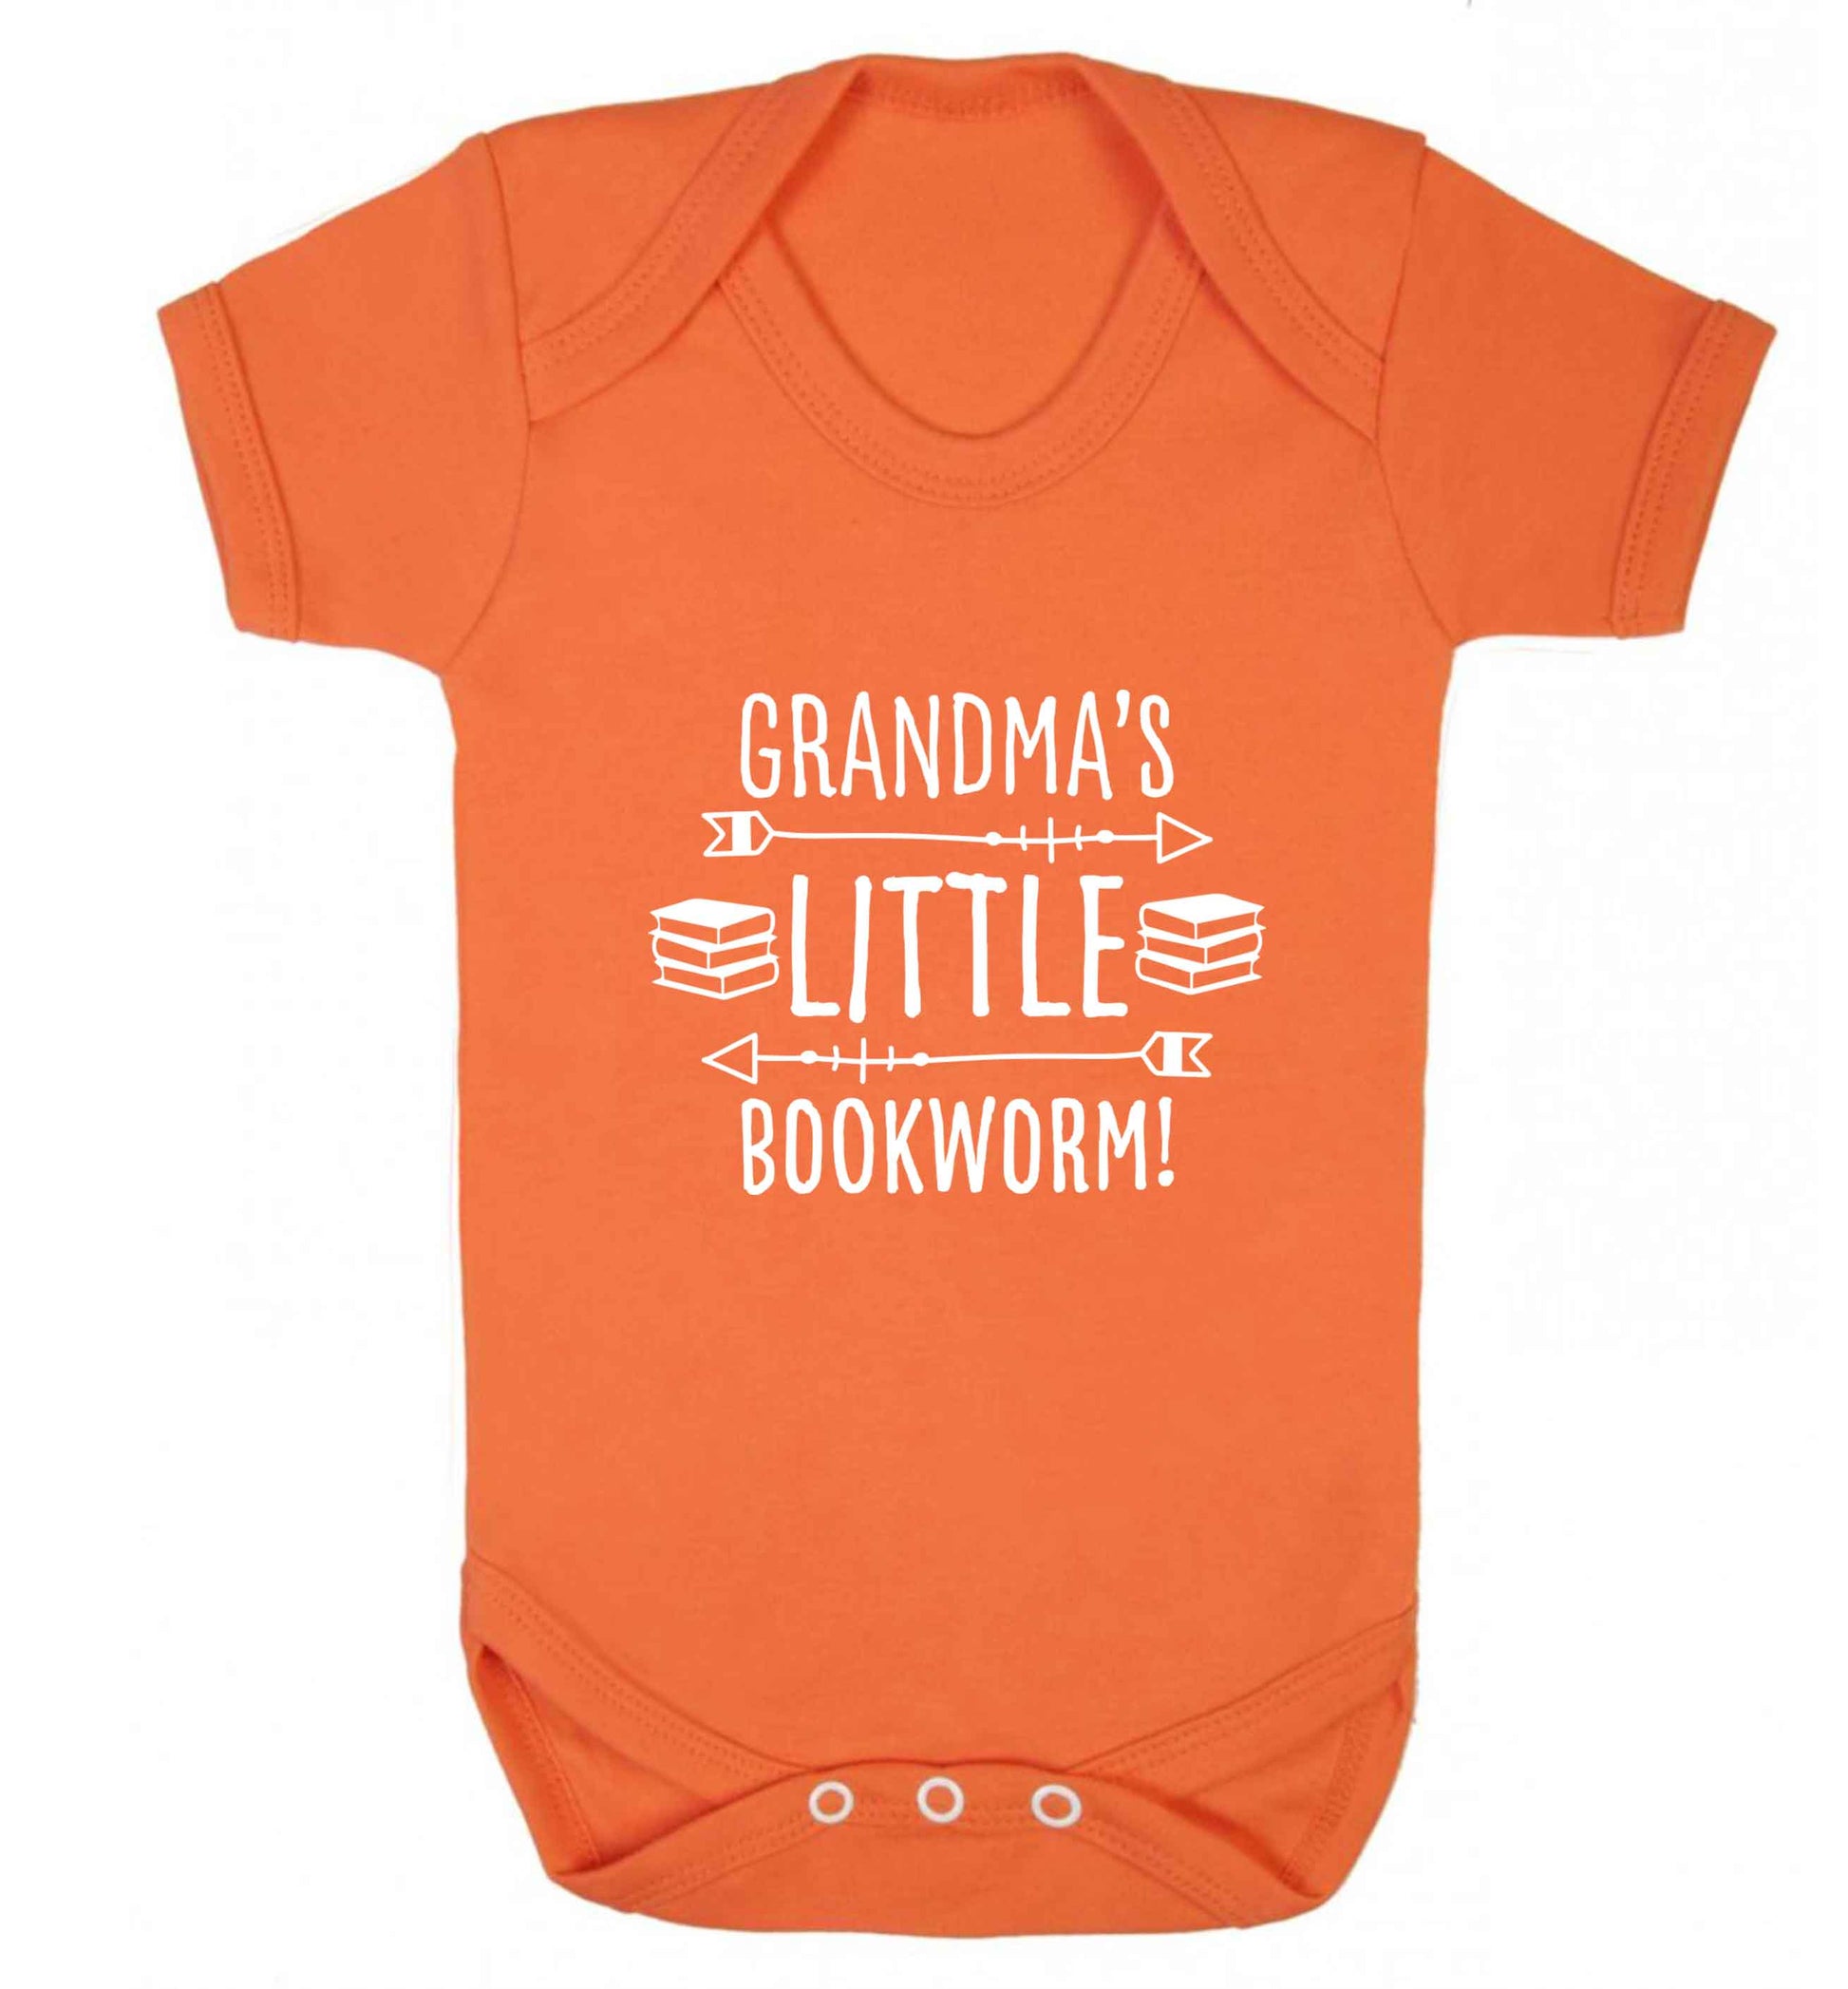 Grandma's little bookworm baby vest orange 18-24 months